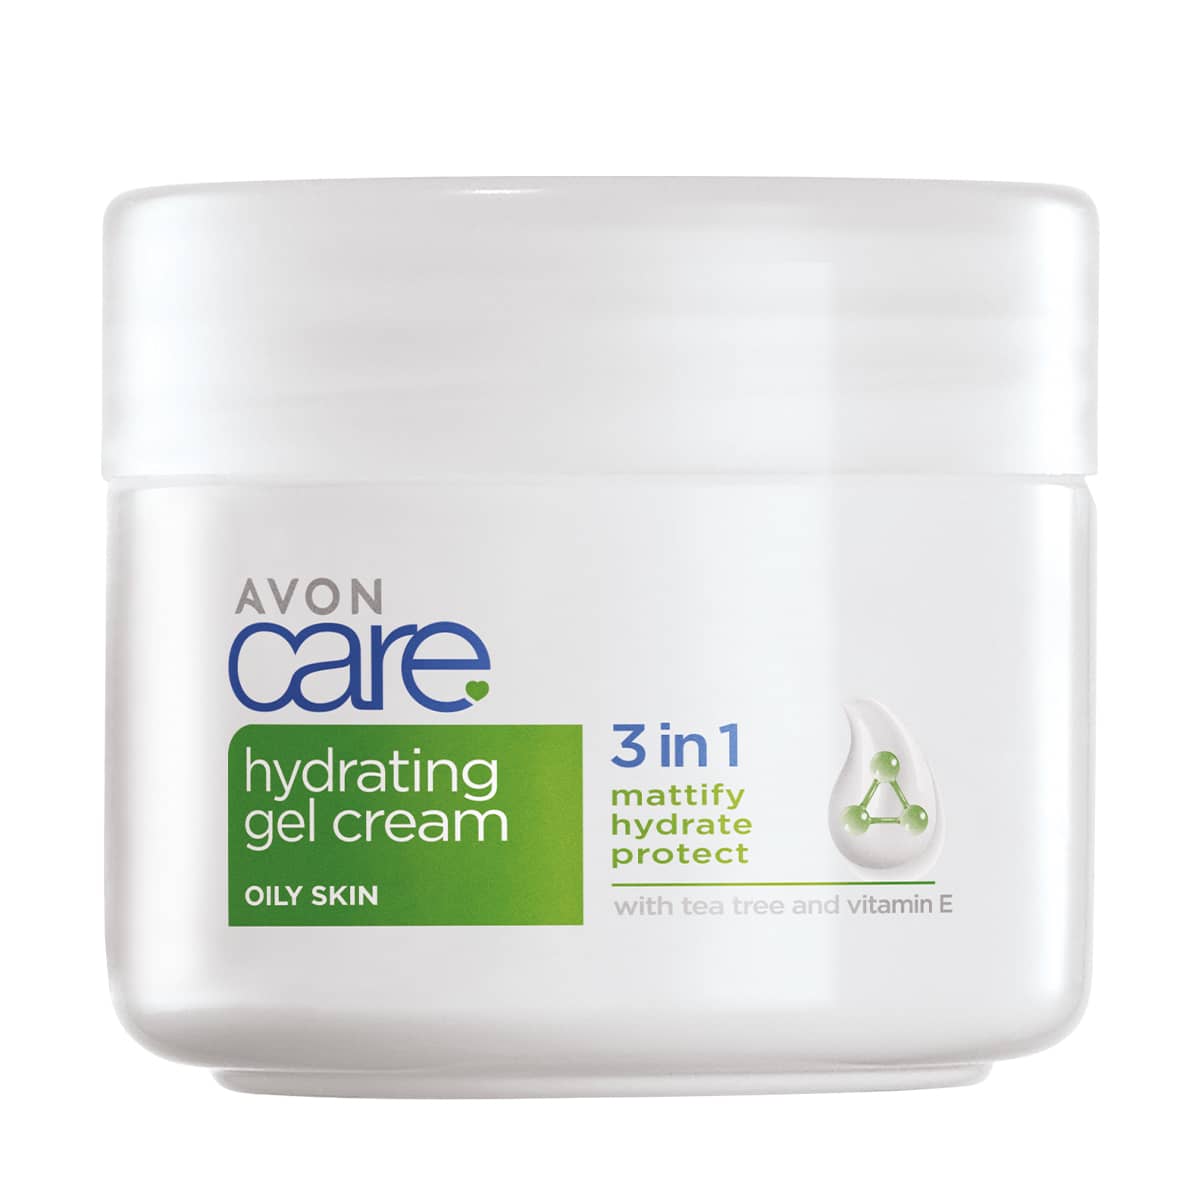 Avon Care Hydrating Gel Cream for Oily Skin